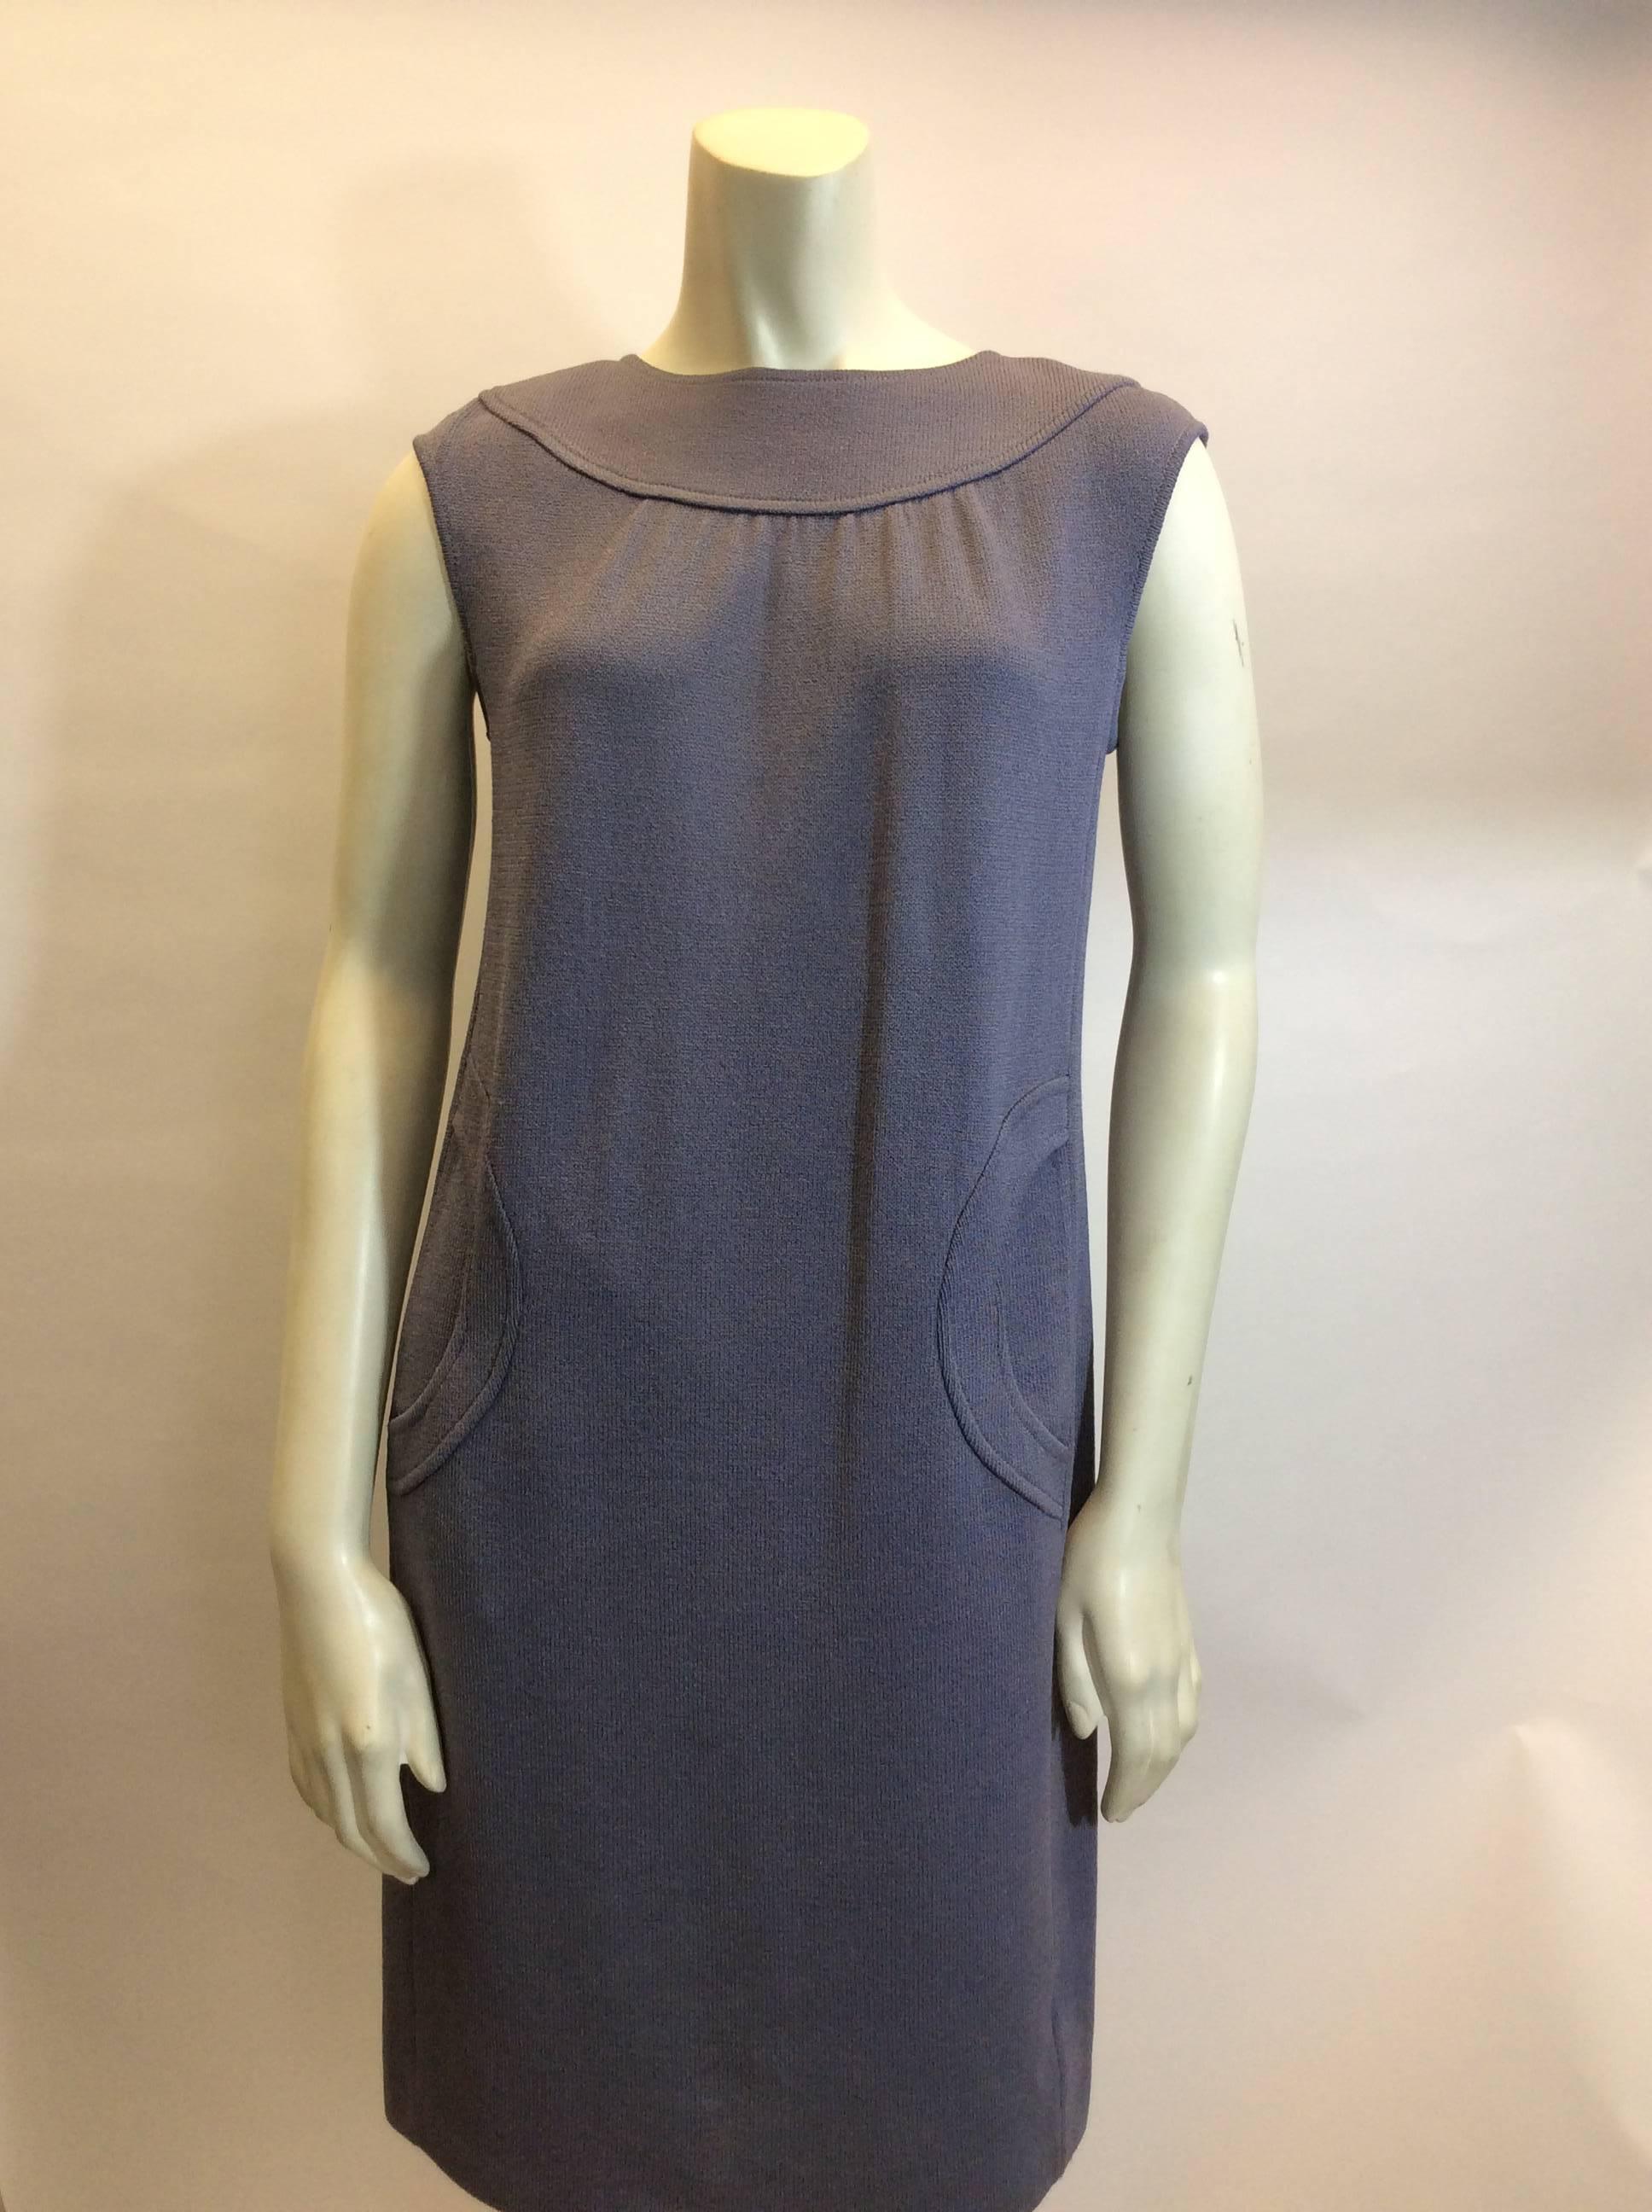 St. John Lavender Knit Sleeveless Dress
Two front pockets
$250 
size 4
Back zipper